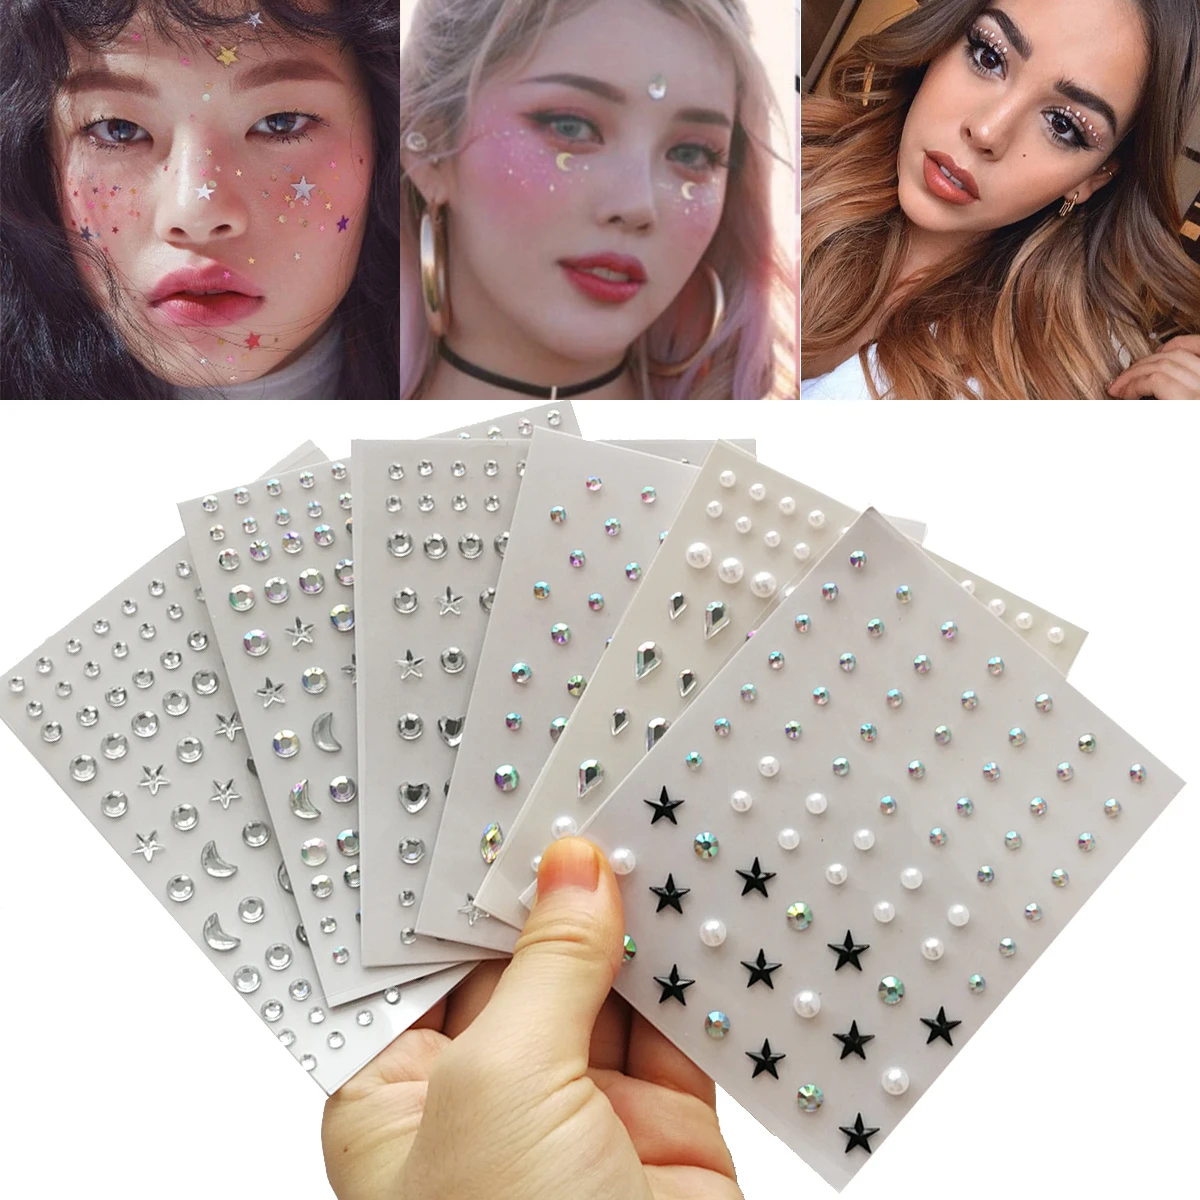 Makeup Diamond Eyes Face Festival DIY Body Crystal Gems Tattoo Adhesive Rhinestone Nail Art Decoration Acrylic Eyeshadow Sticker